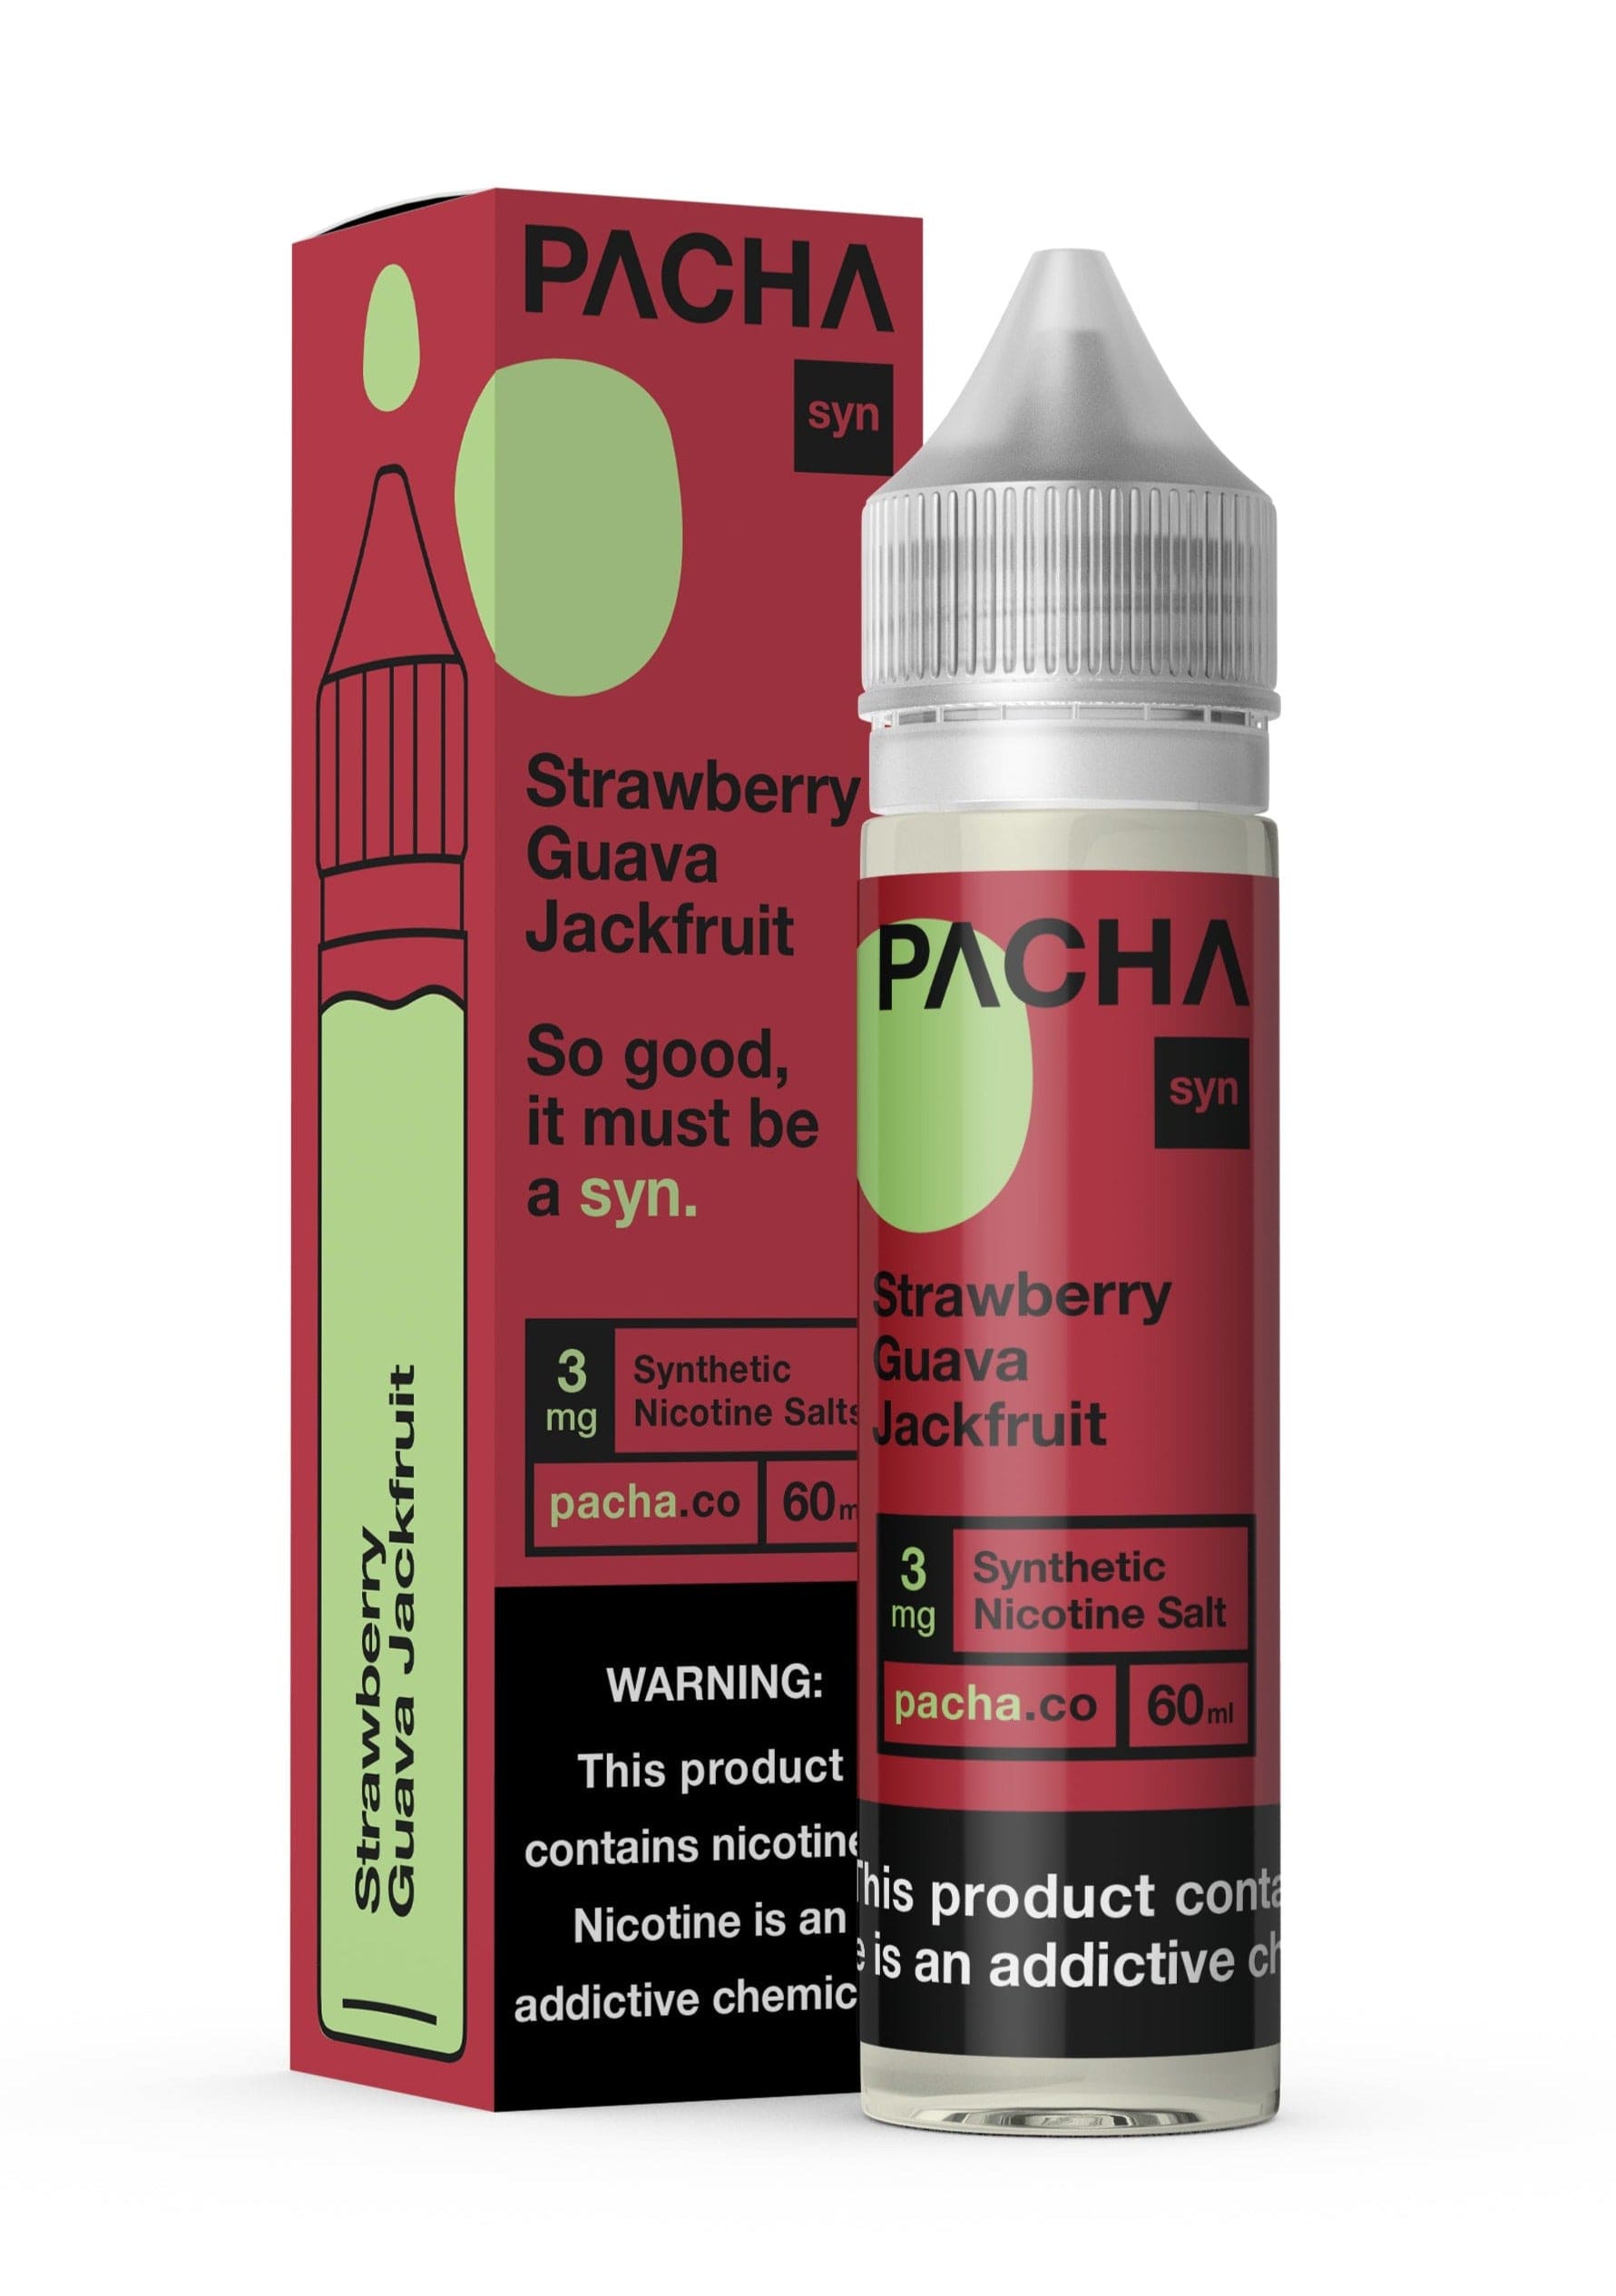 Pacha Syn Strawberry Guava and Jackfruit 60ml Vape Juice